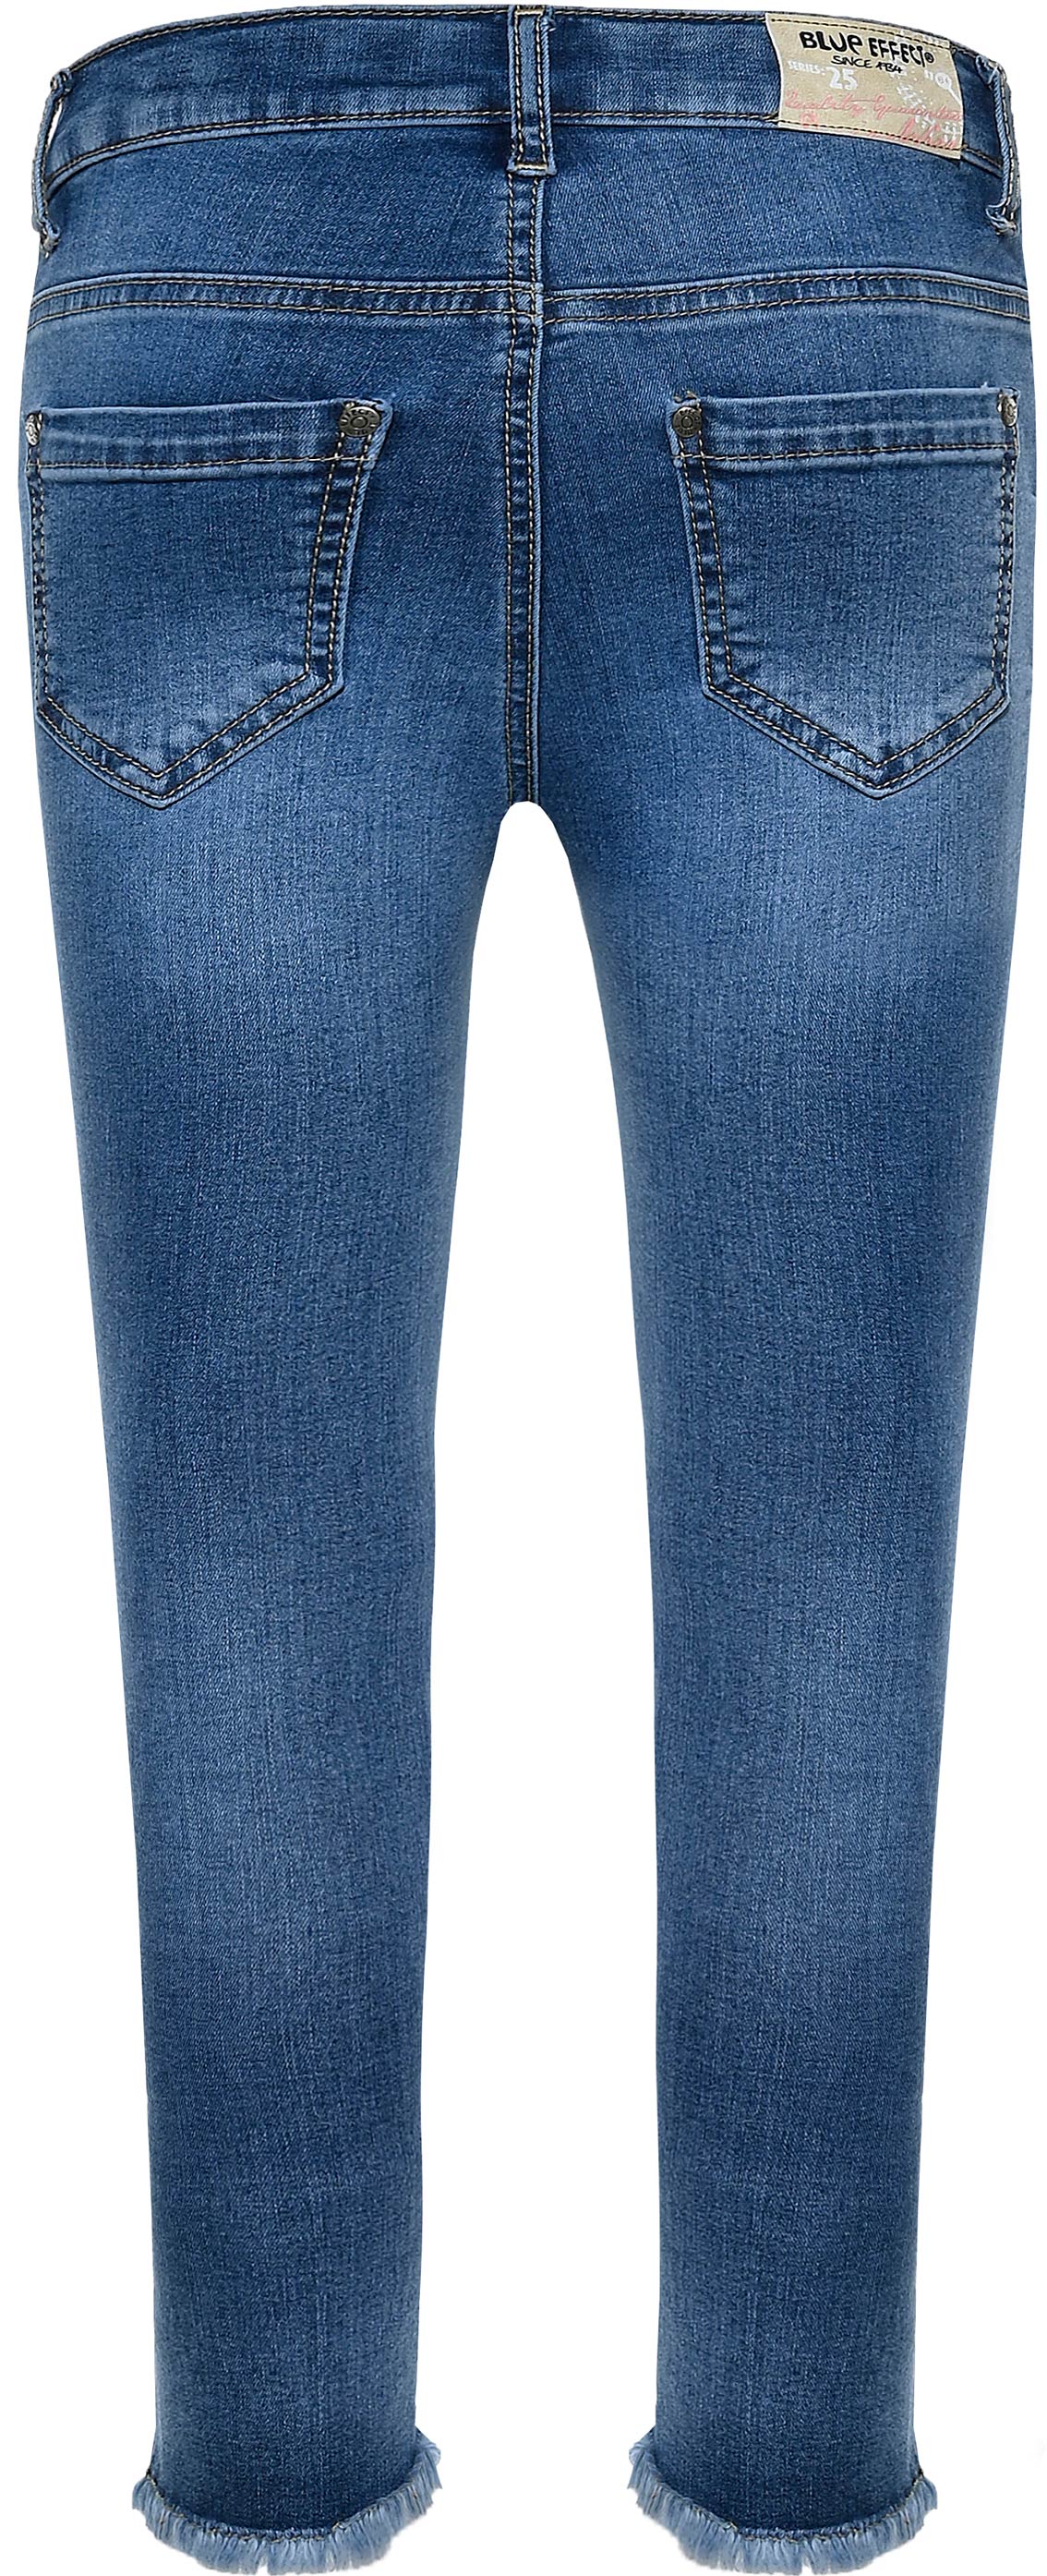 1302-Girls High-Waist Jeans Cropped, Knee Cut, Ultrastretch, verfügbar in Slim,Normal